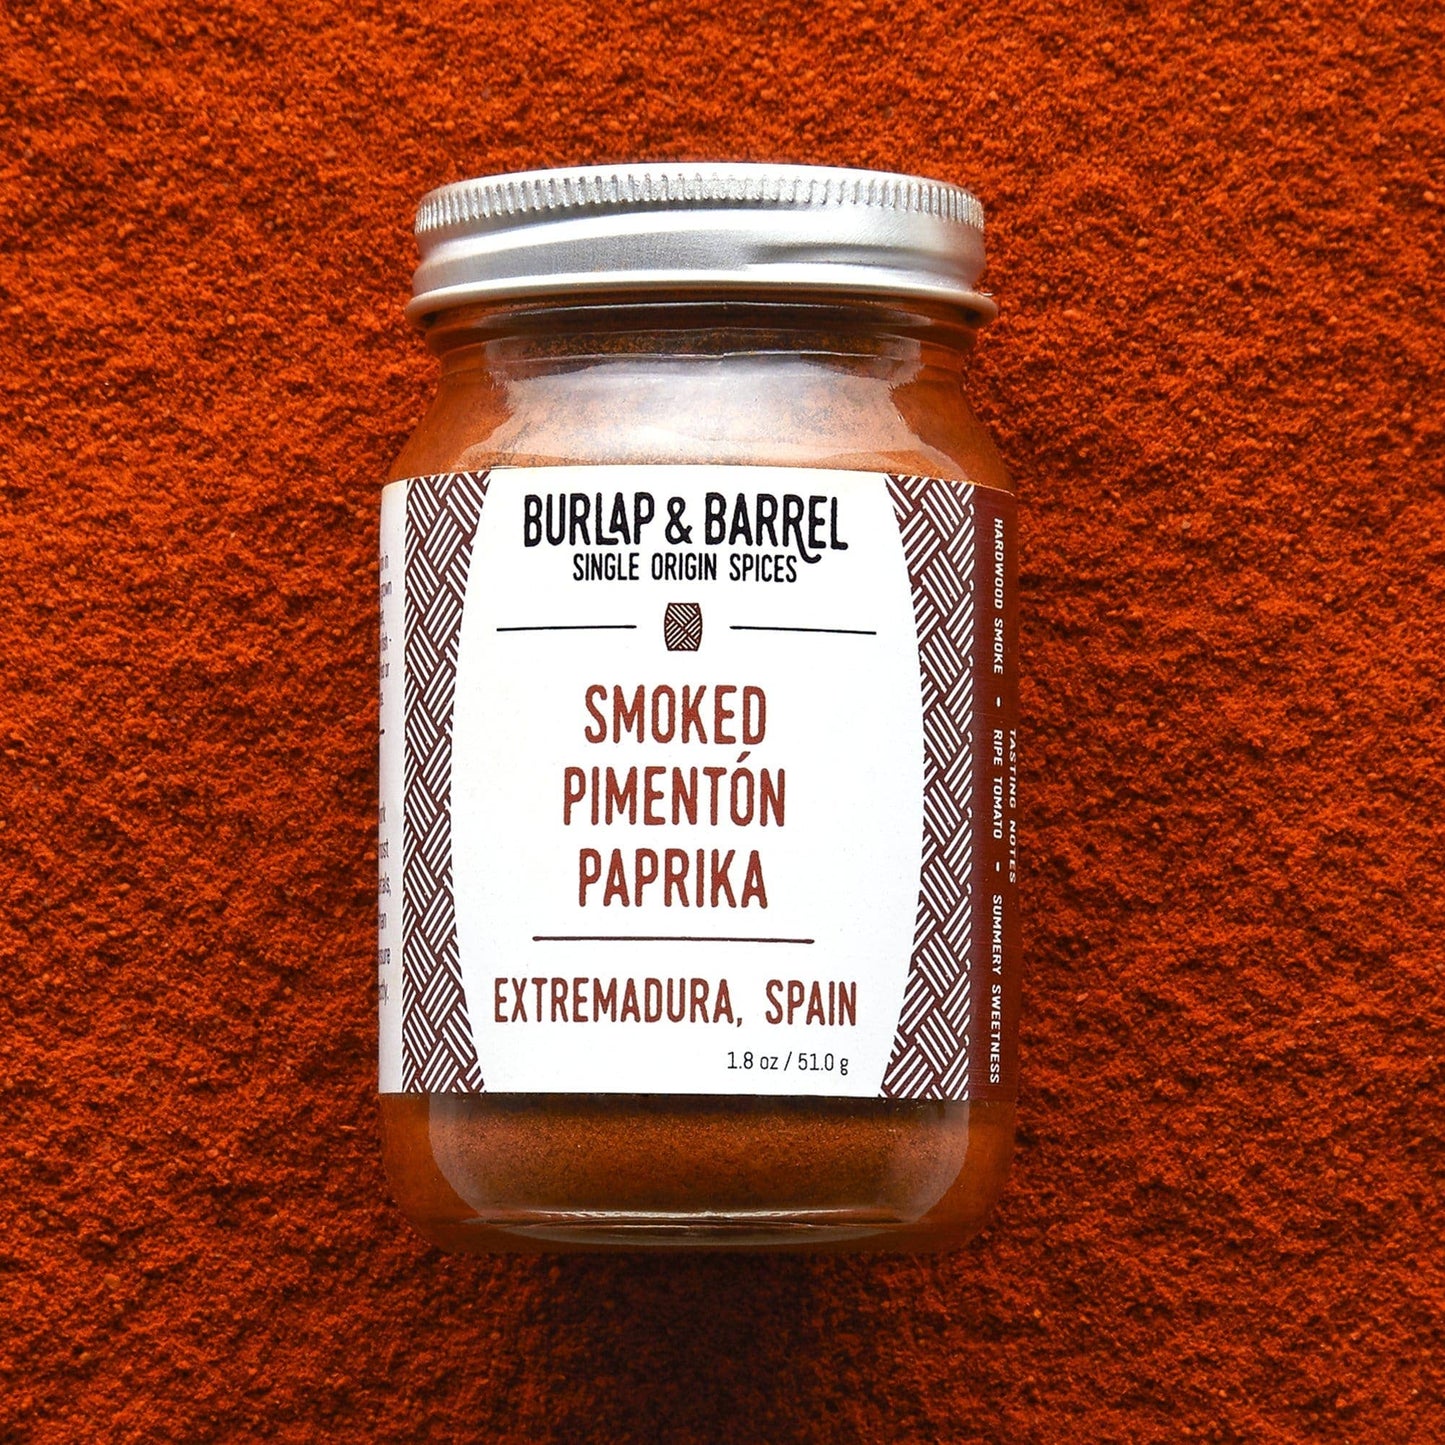 Burlap & Barrel's Smoked Pimenton Paprika